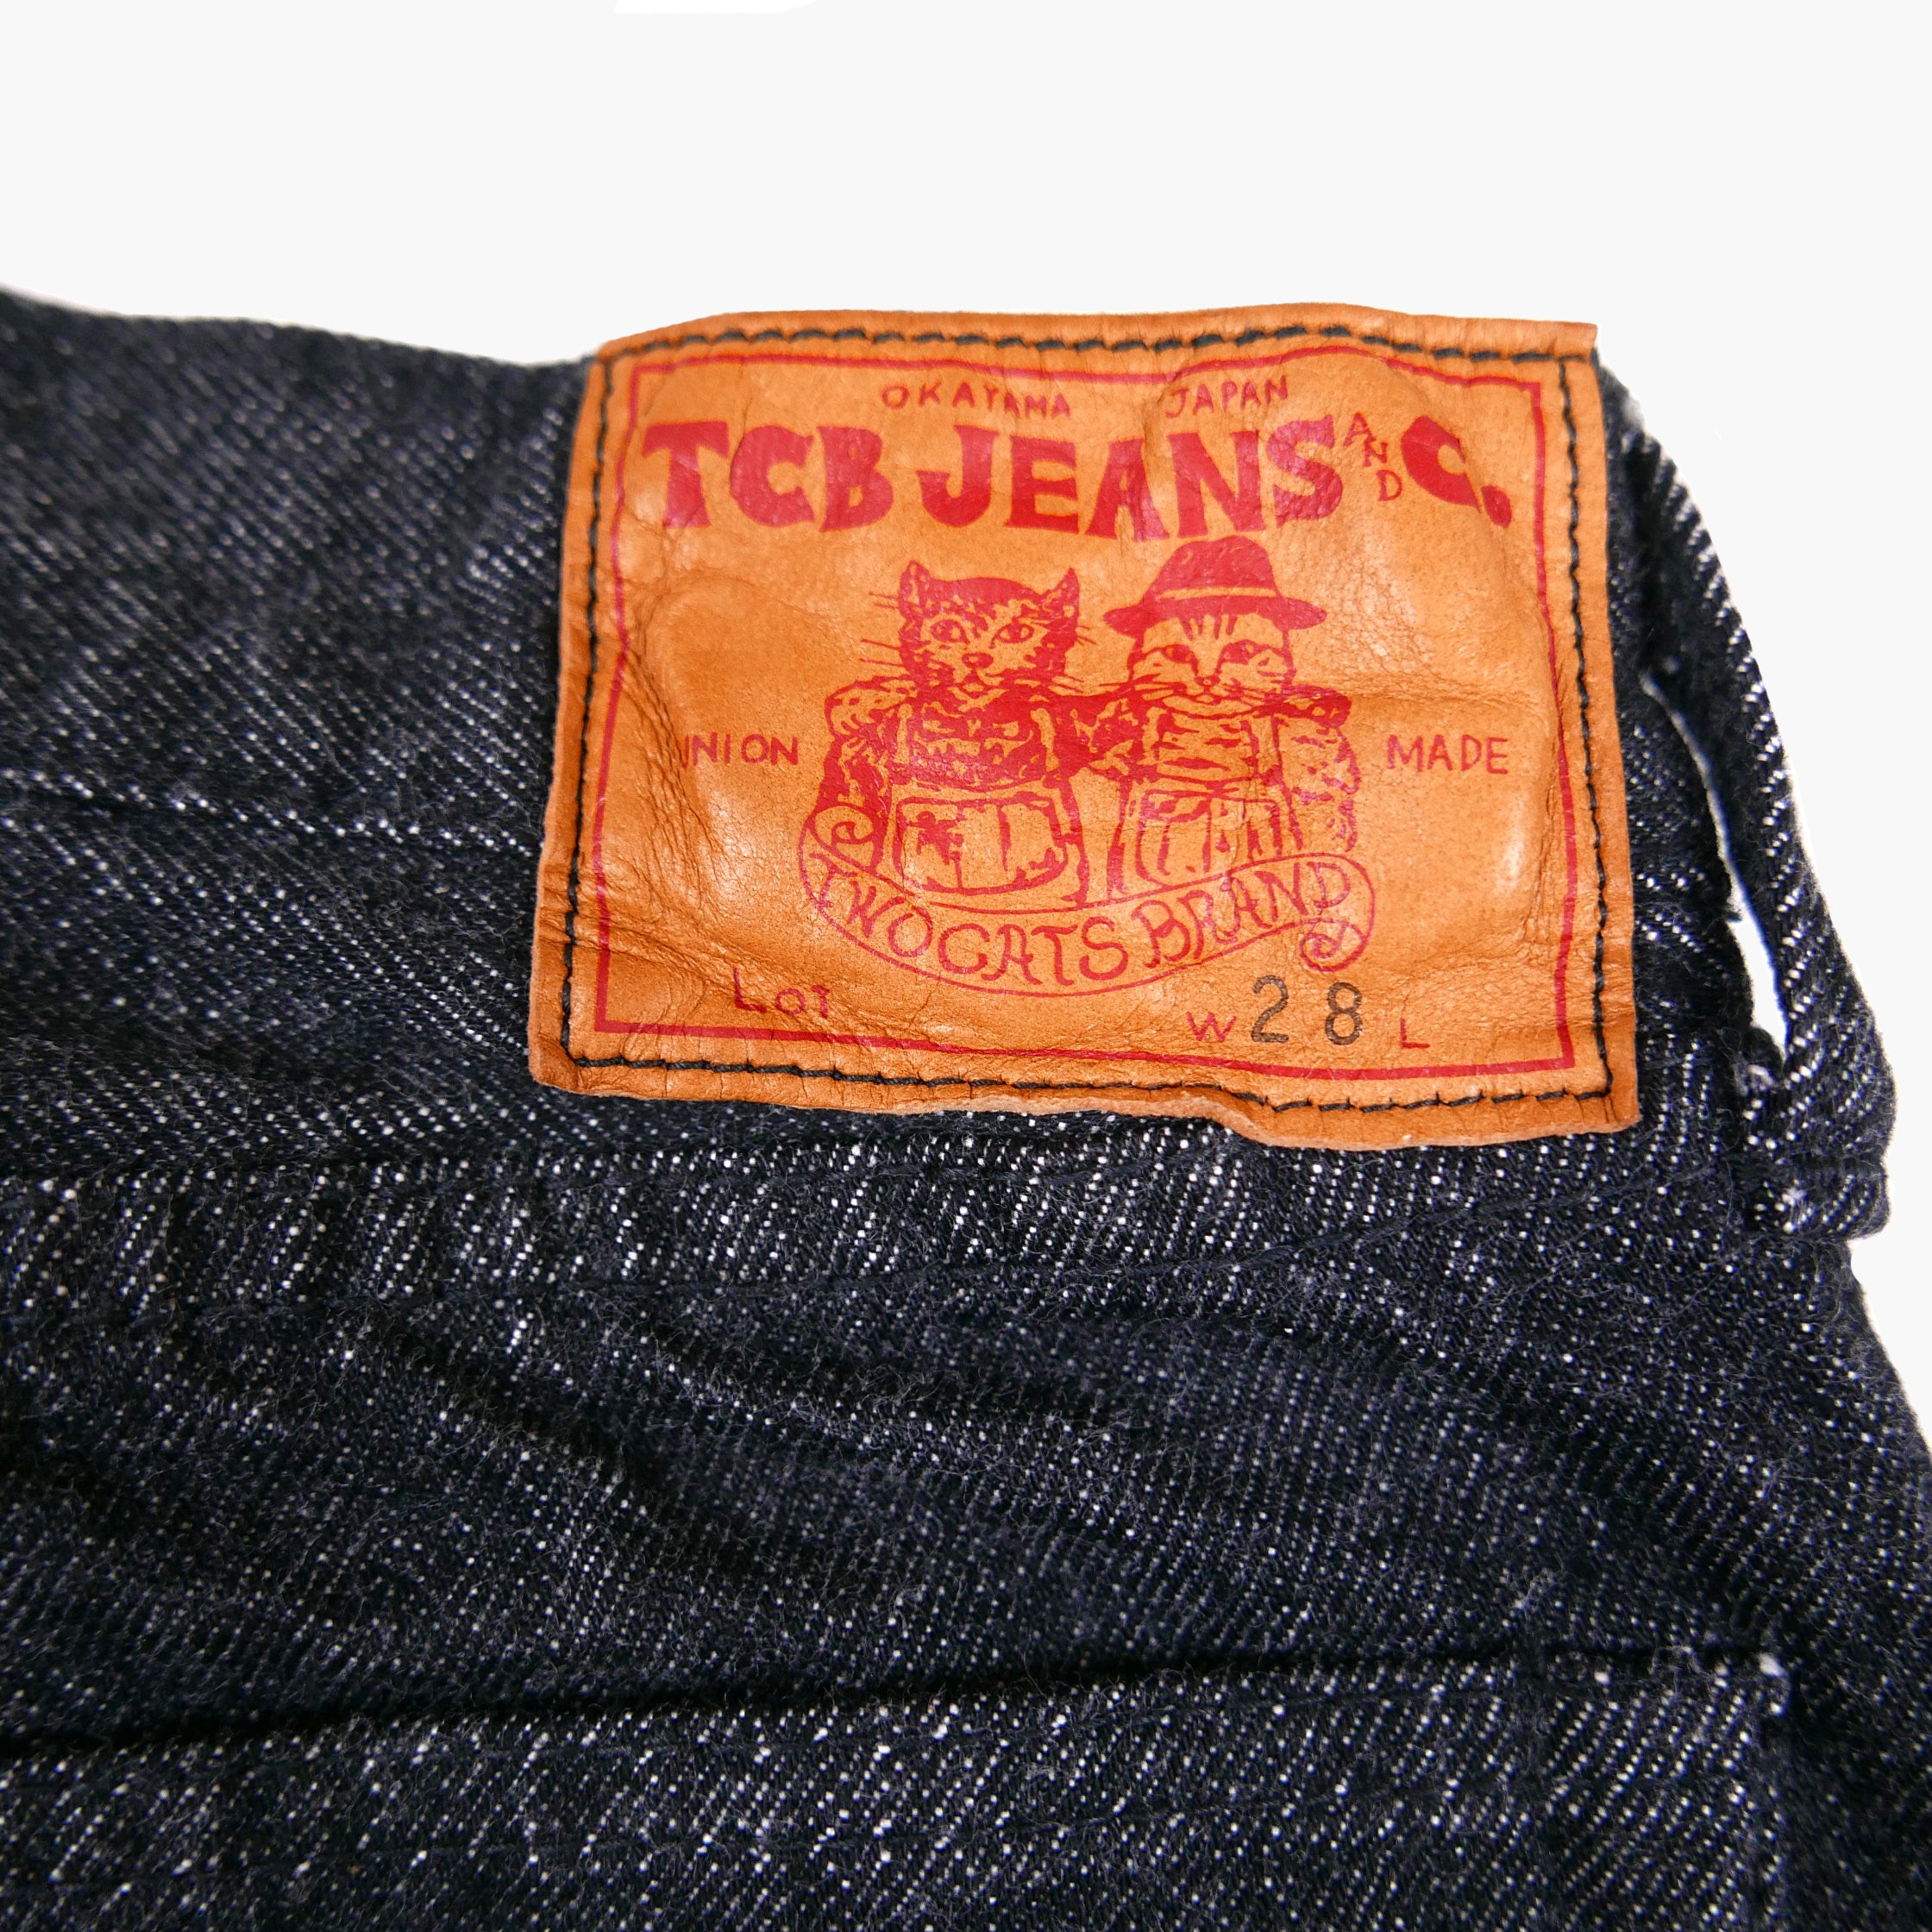 13oz Slim 50's Black Selvedge Jean - One Washed